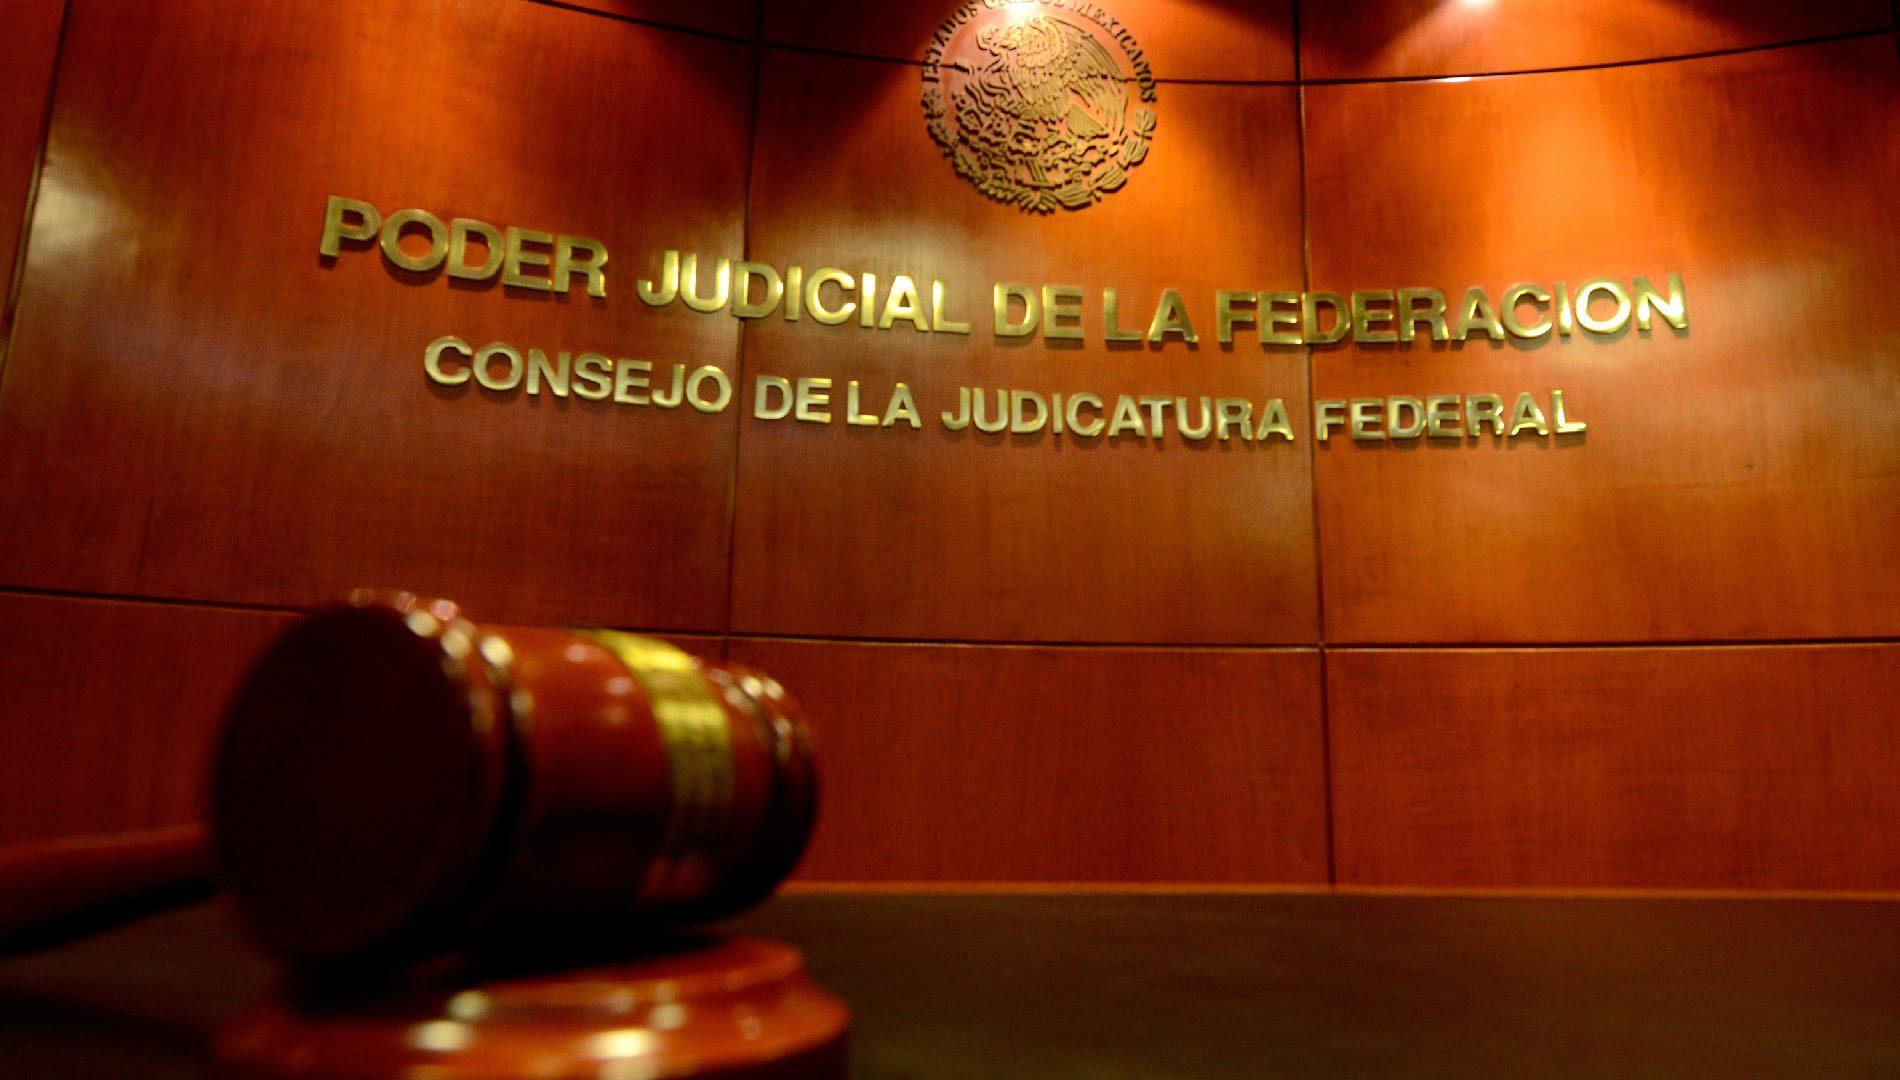 Sacudida al Poder Judicial: Monreal propone reemplazar al Consejo de la Judicatura